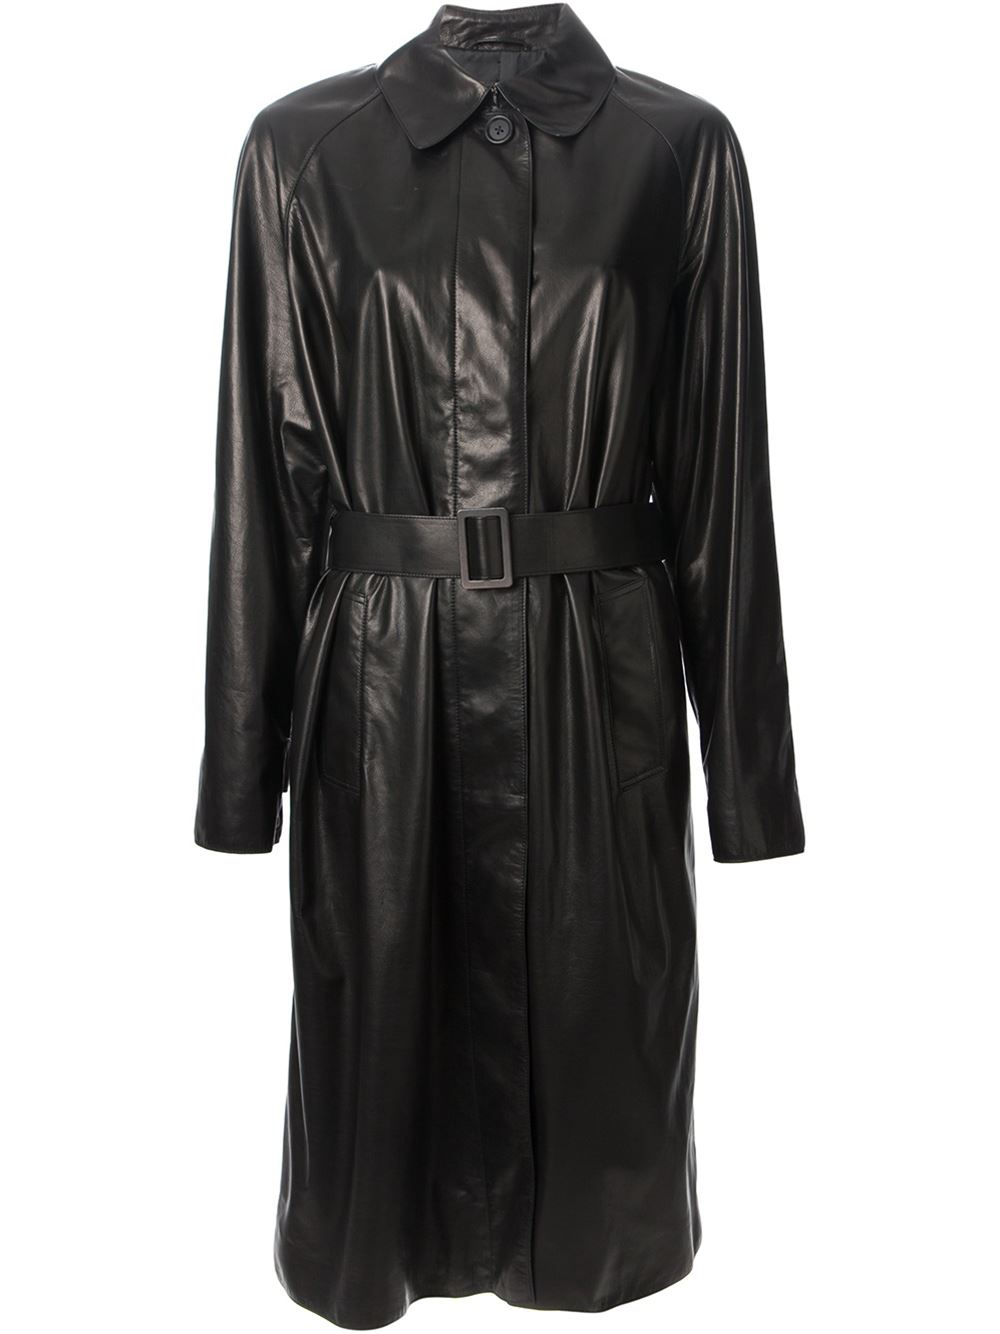 Bottega veneta Leather Belted Trench Coat in Black | Lyst